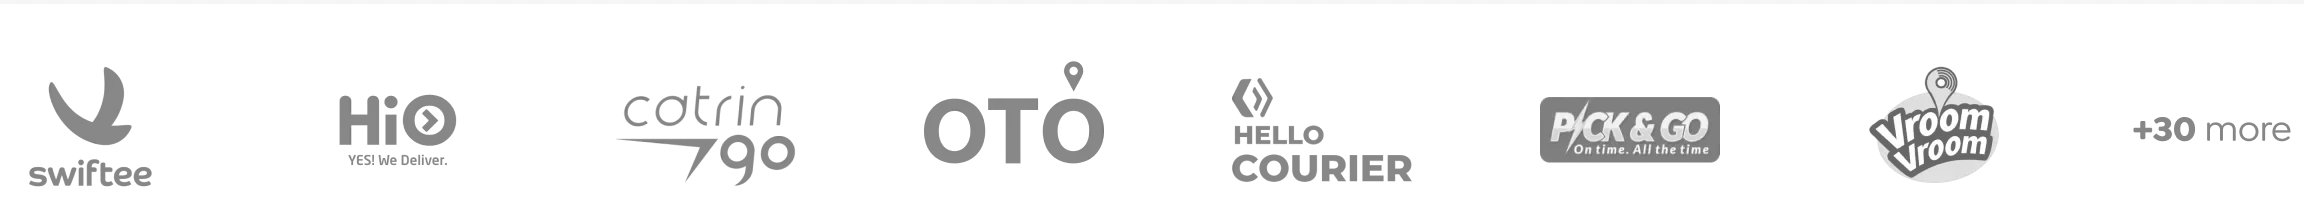 Onro customers logo